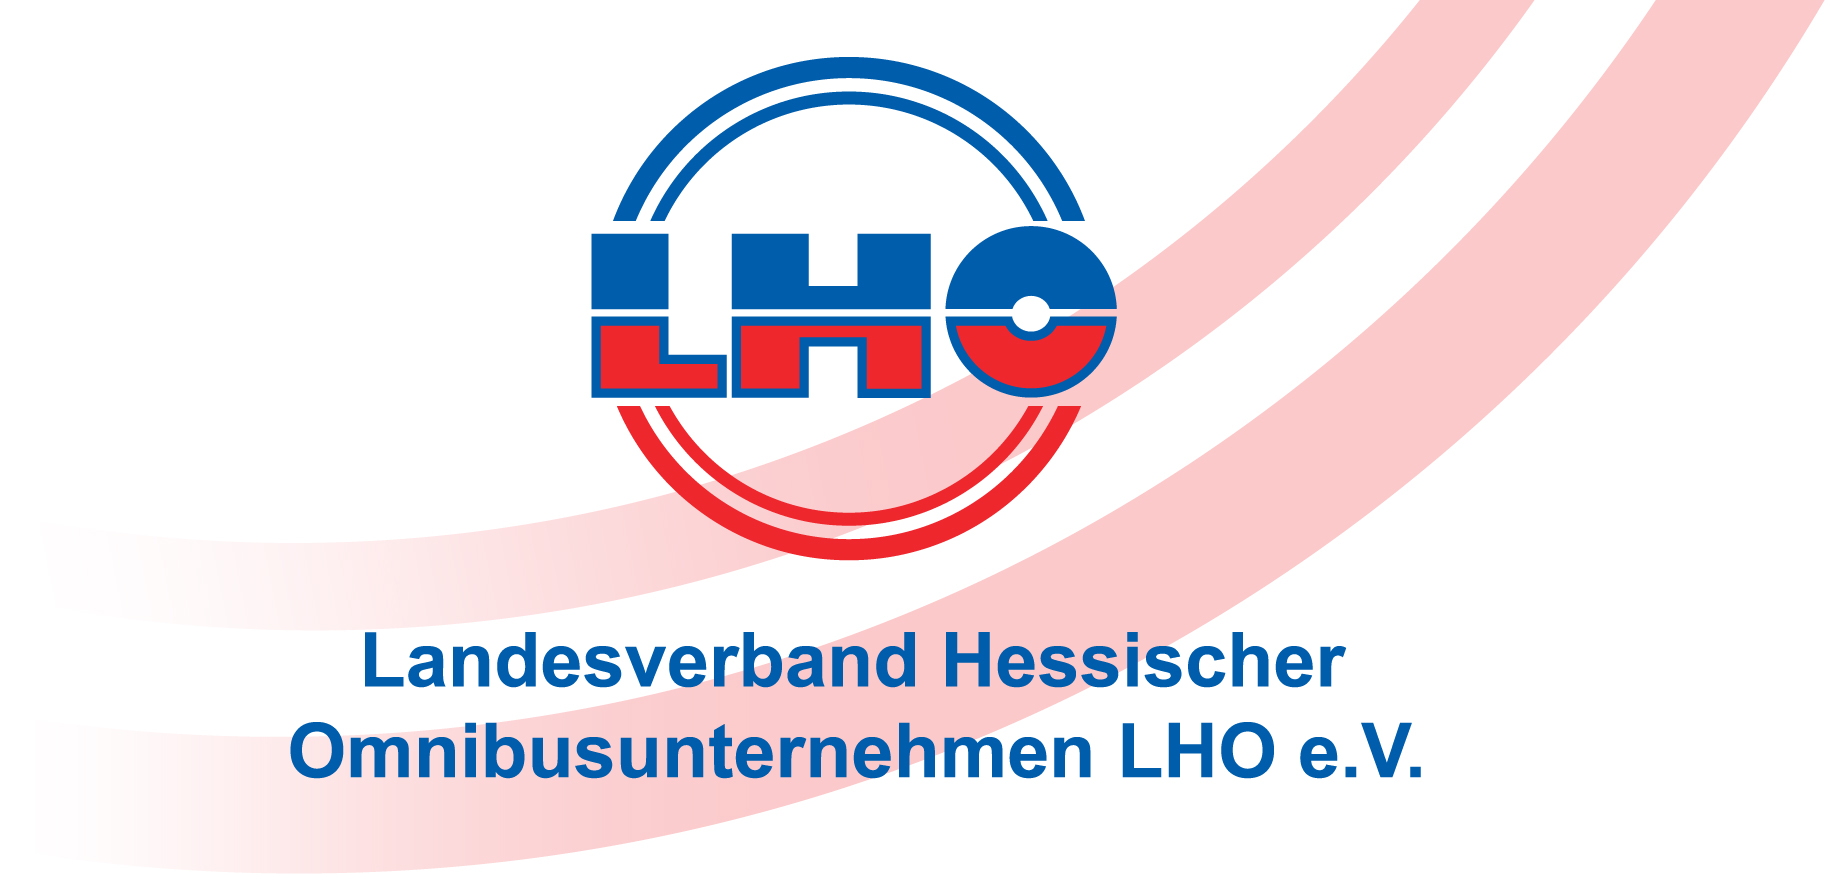 Landesverband Hessischer Omnibusunternehmen (LHO) e.V.